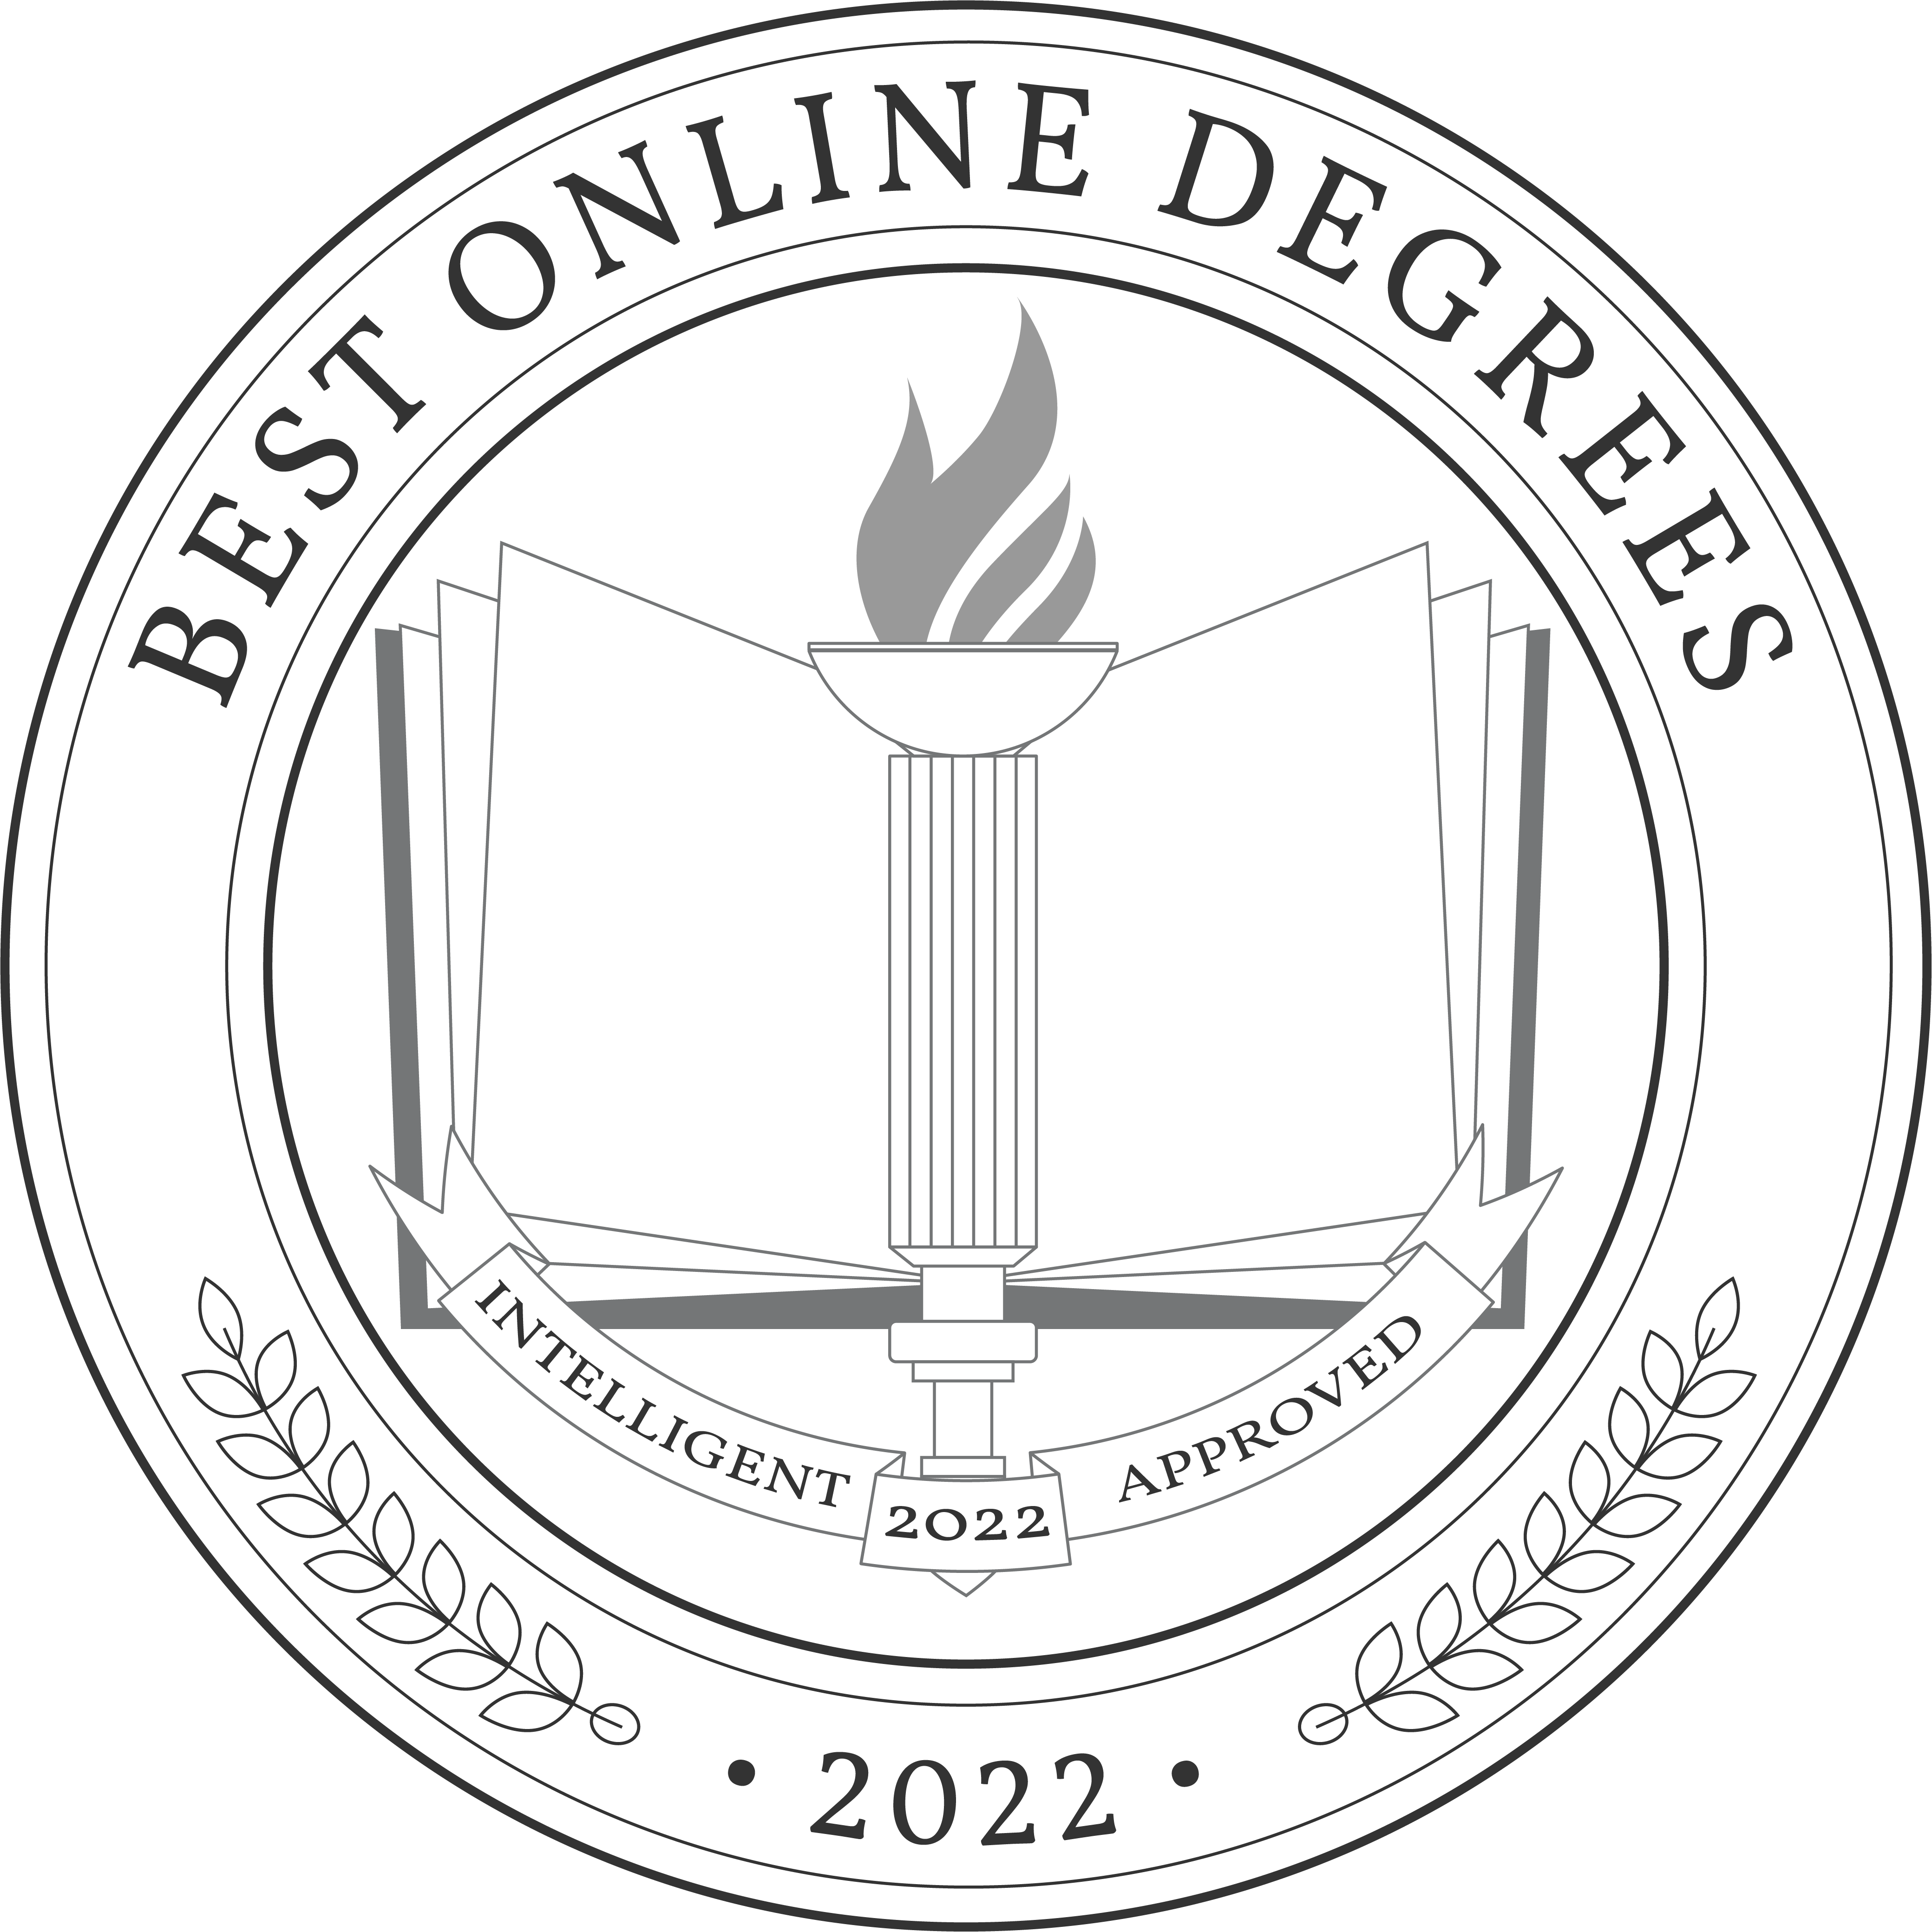 Best-Online-Degrees-2022-Badge.png